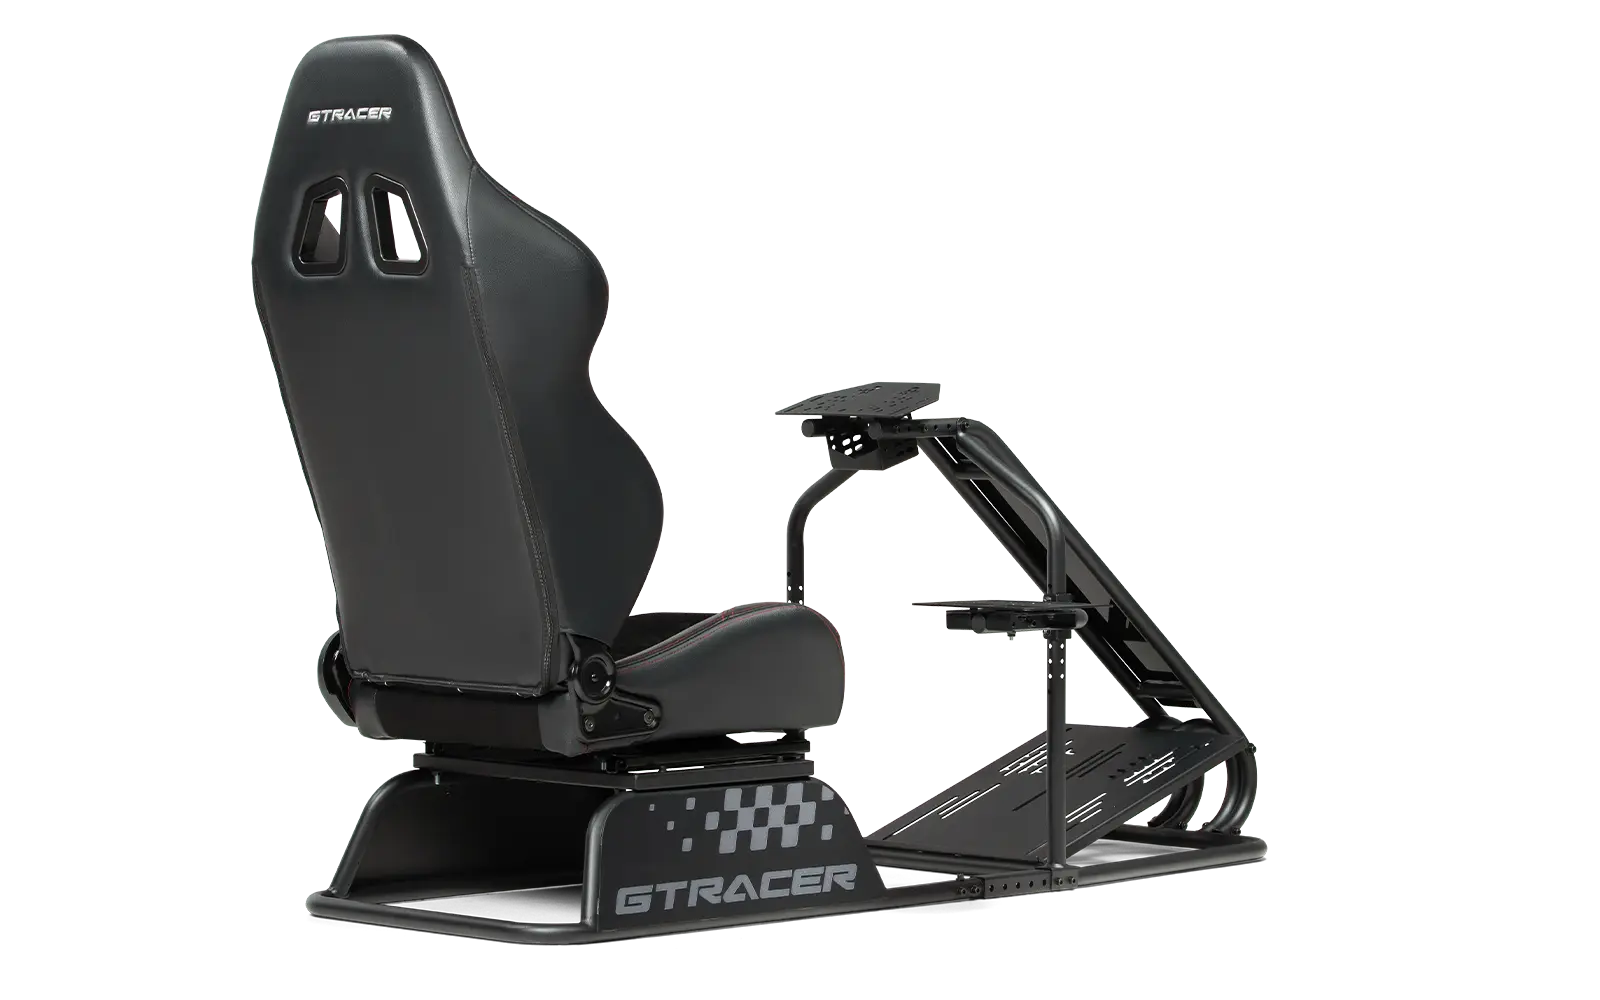 RECART GTR Sim racing cockpit